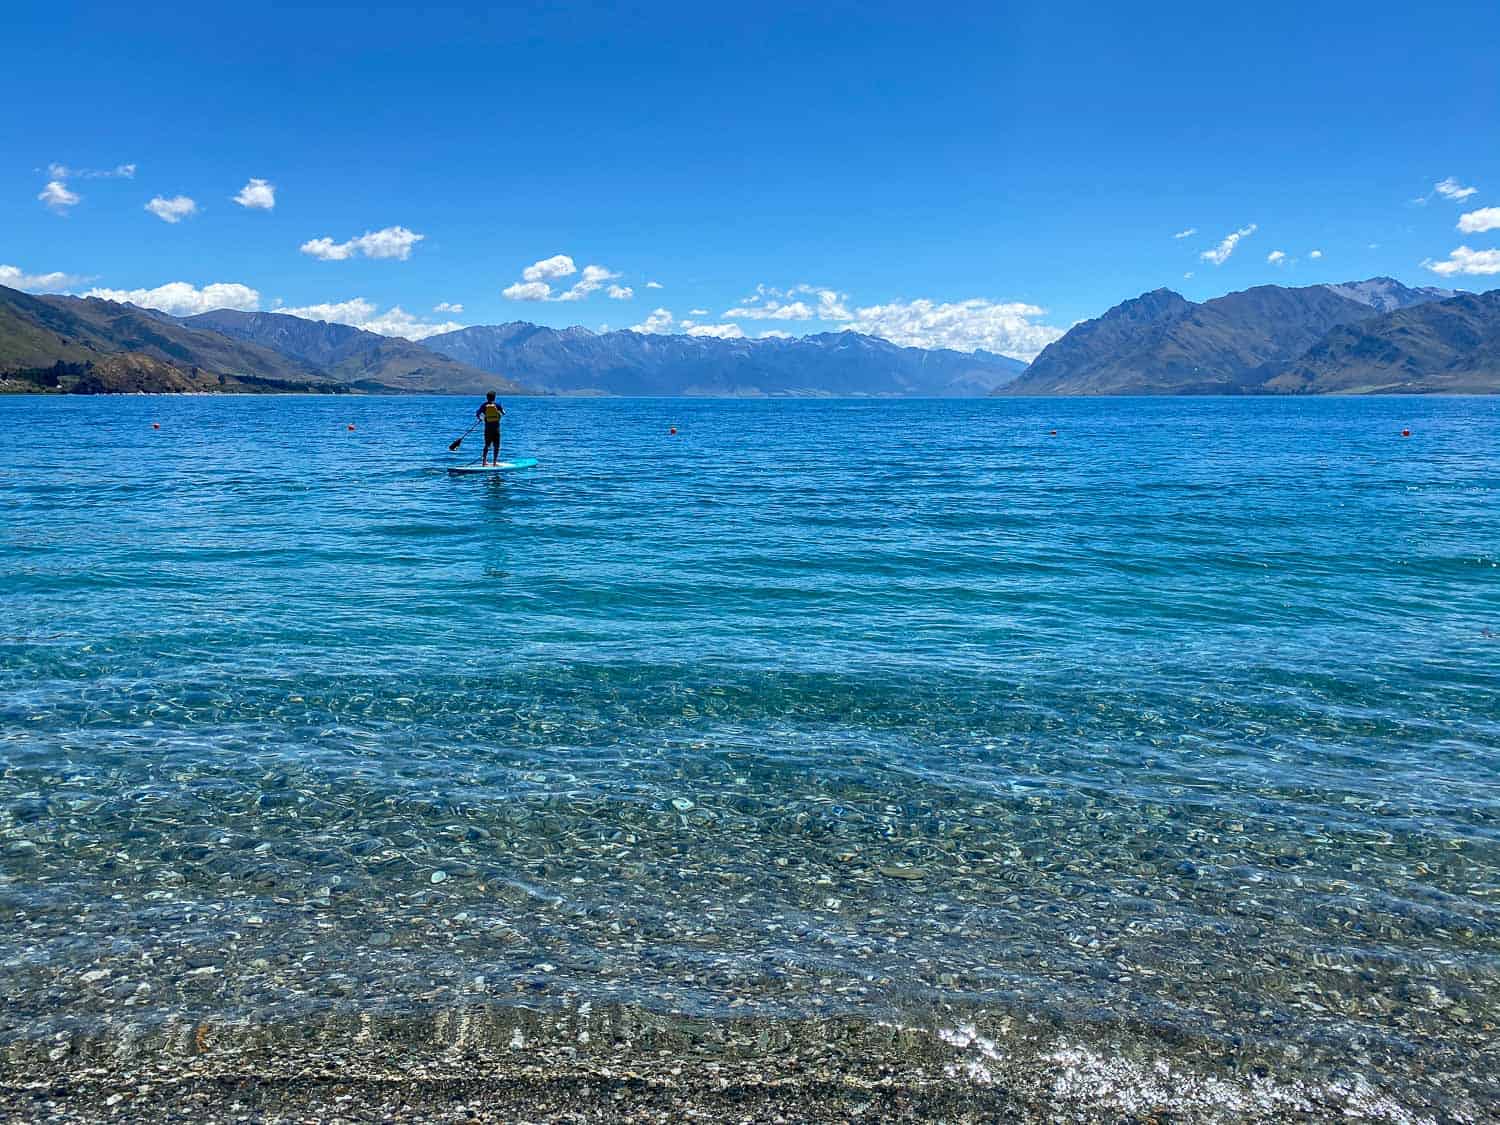 Simon stand up paddle boarding on Lake Hawea, Wanaka, New Zealand